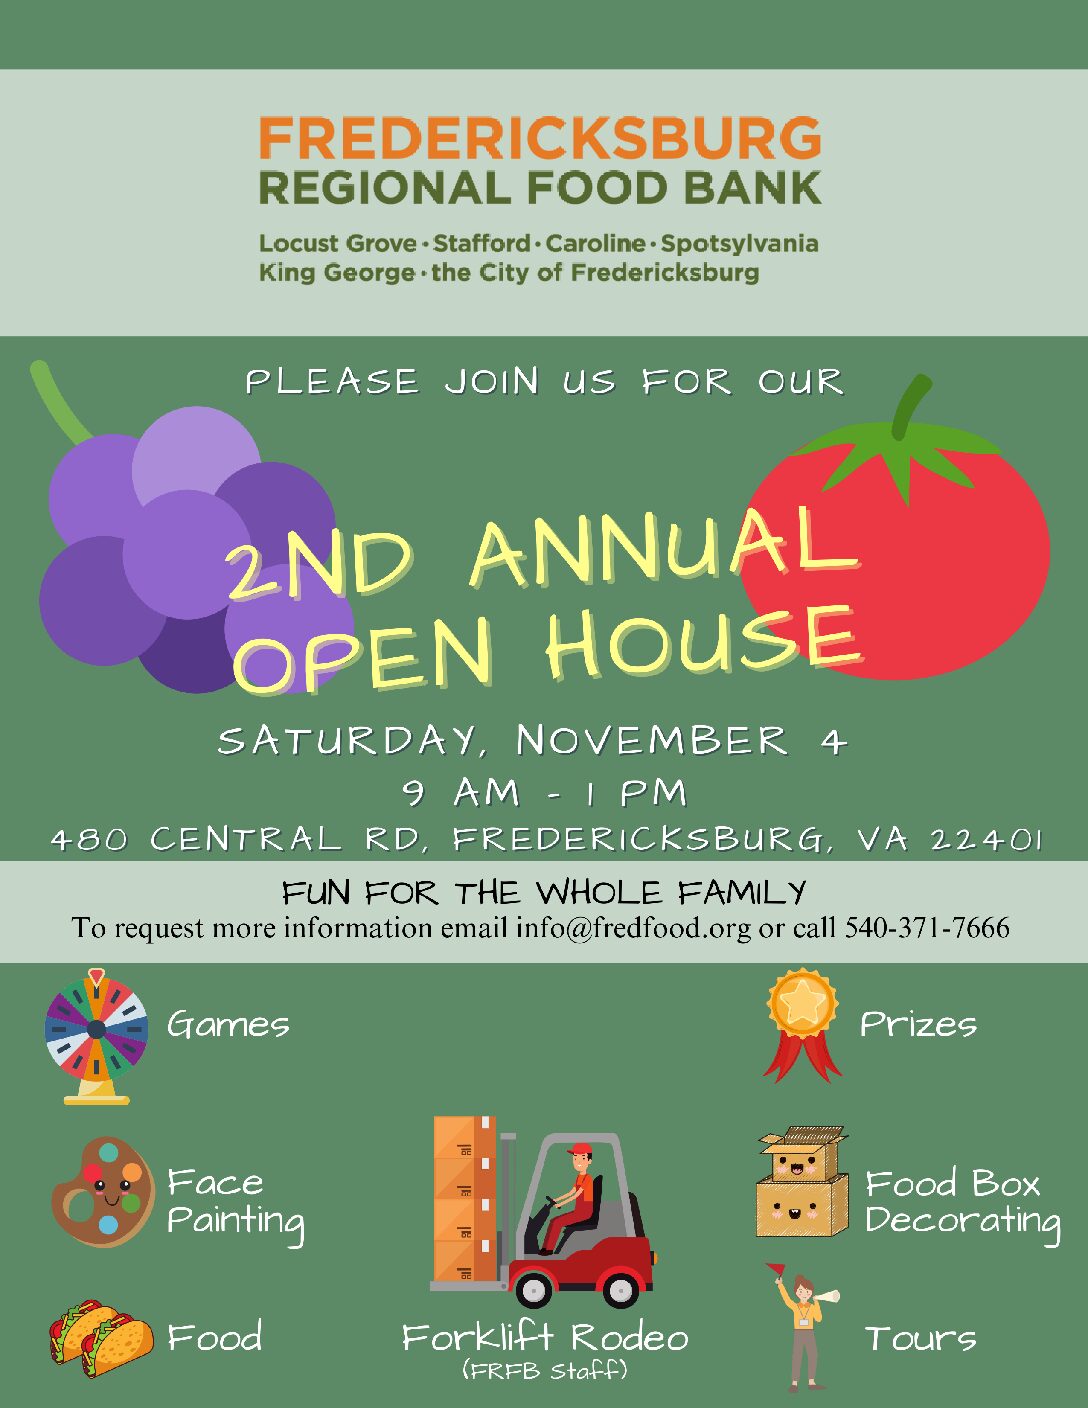 Fredericksburg Regional Food Bank Open House